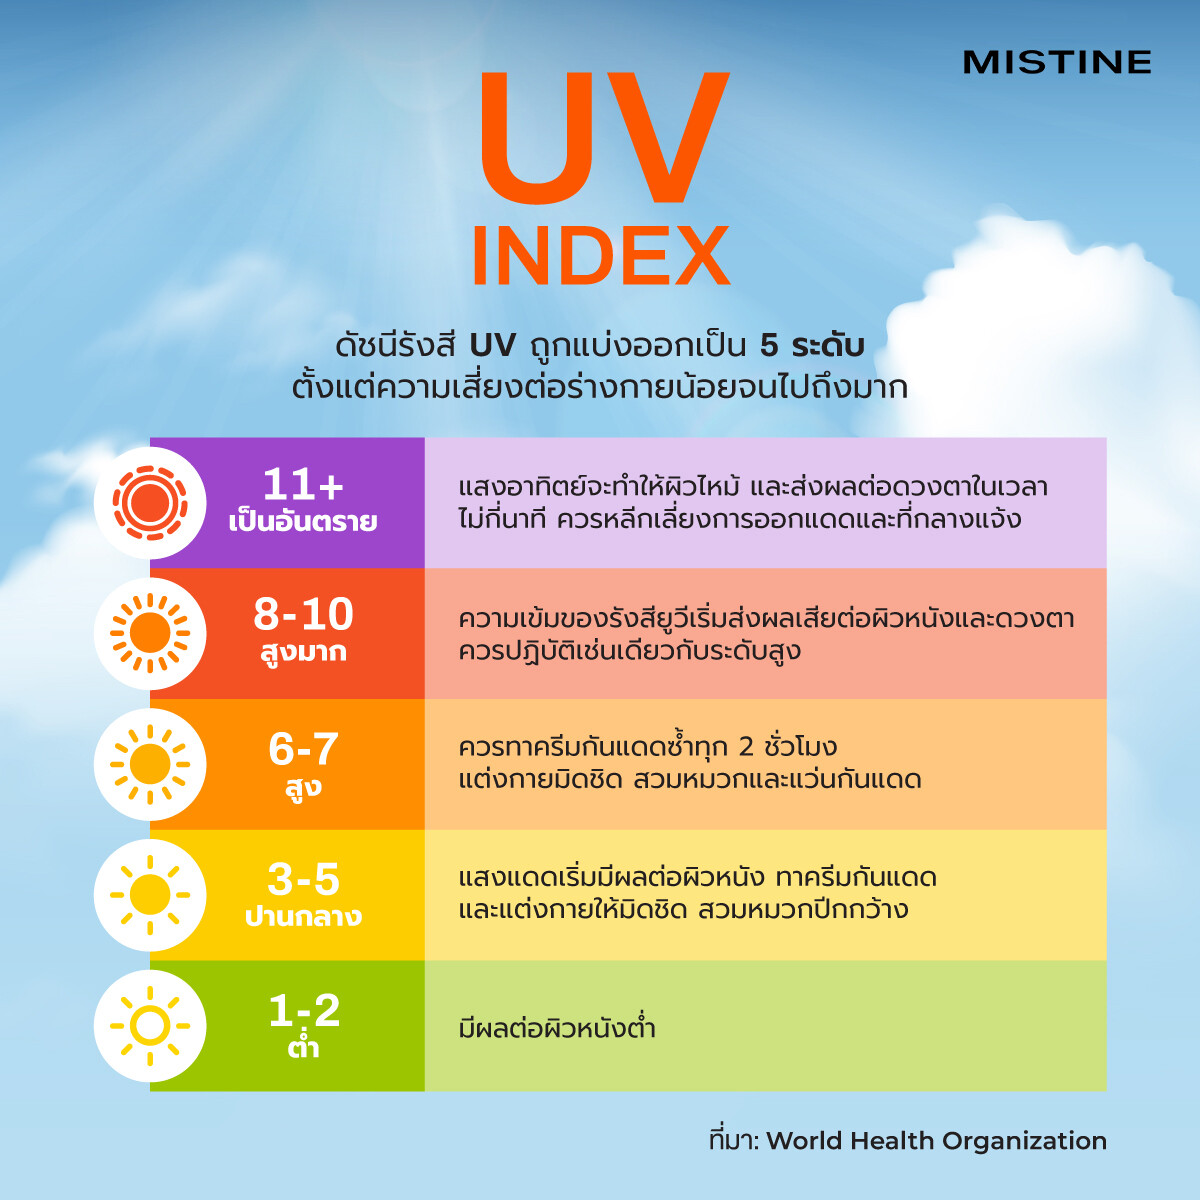 MISTINE ชวนคุยเรื่องเข้าใจผิดเกี่ยวกับรังสี UV พร้อมสู้แดดไทยพุ่ง 43 องศา แบบตัวมารดา!